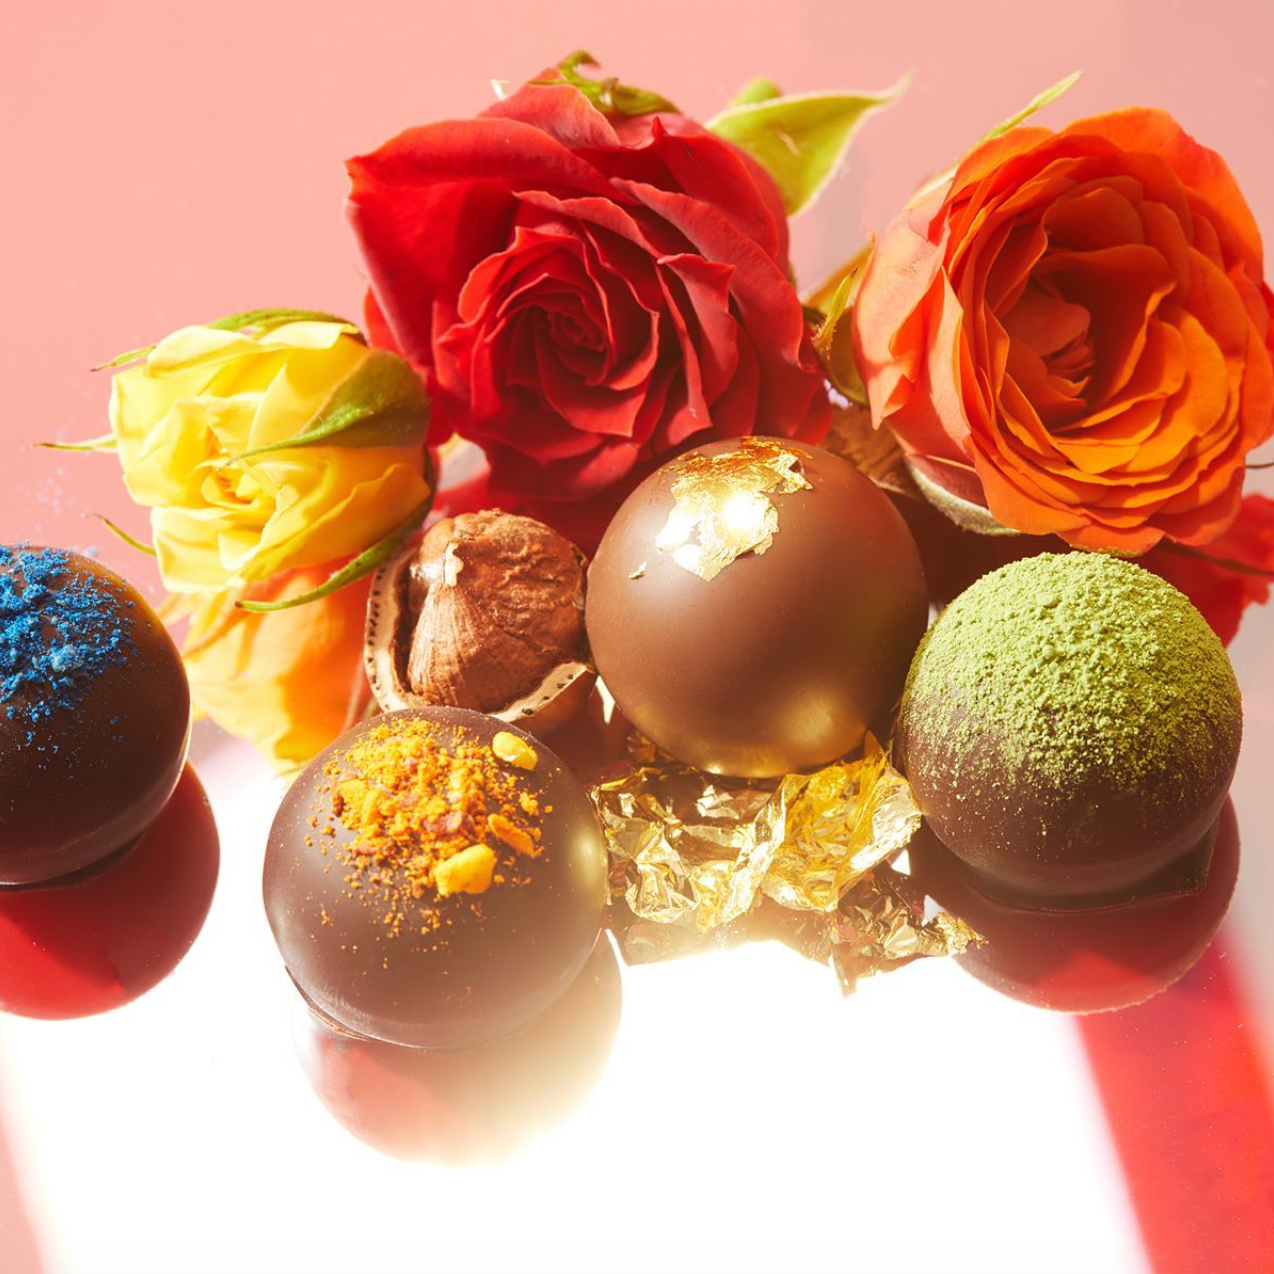 vosges-haut-chocolat-blog/the-benefits-of-chocolate